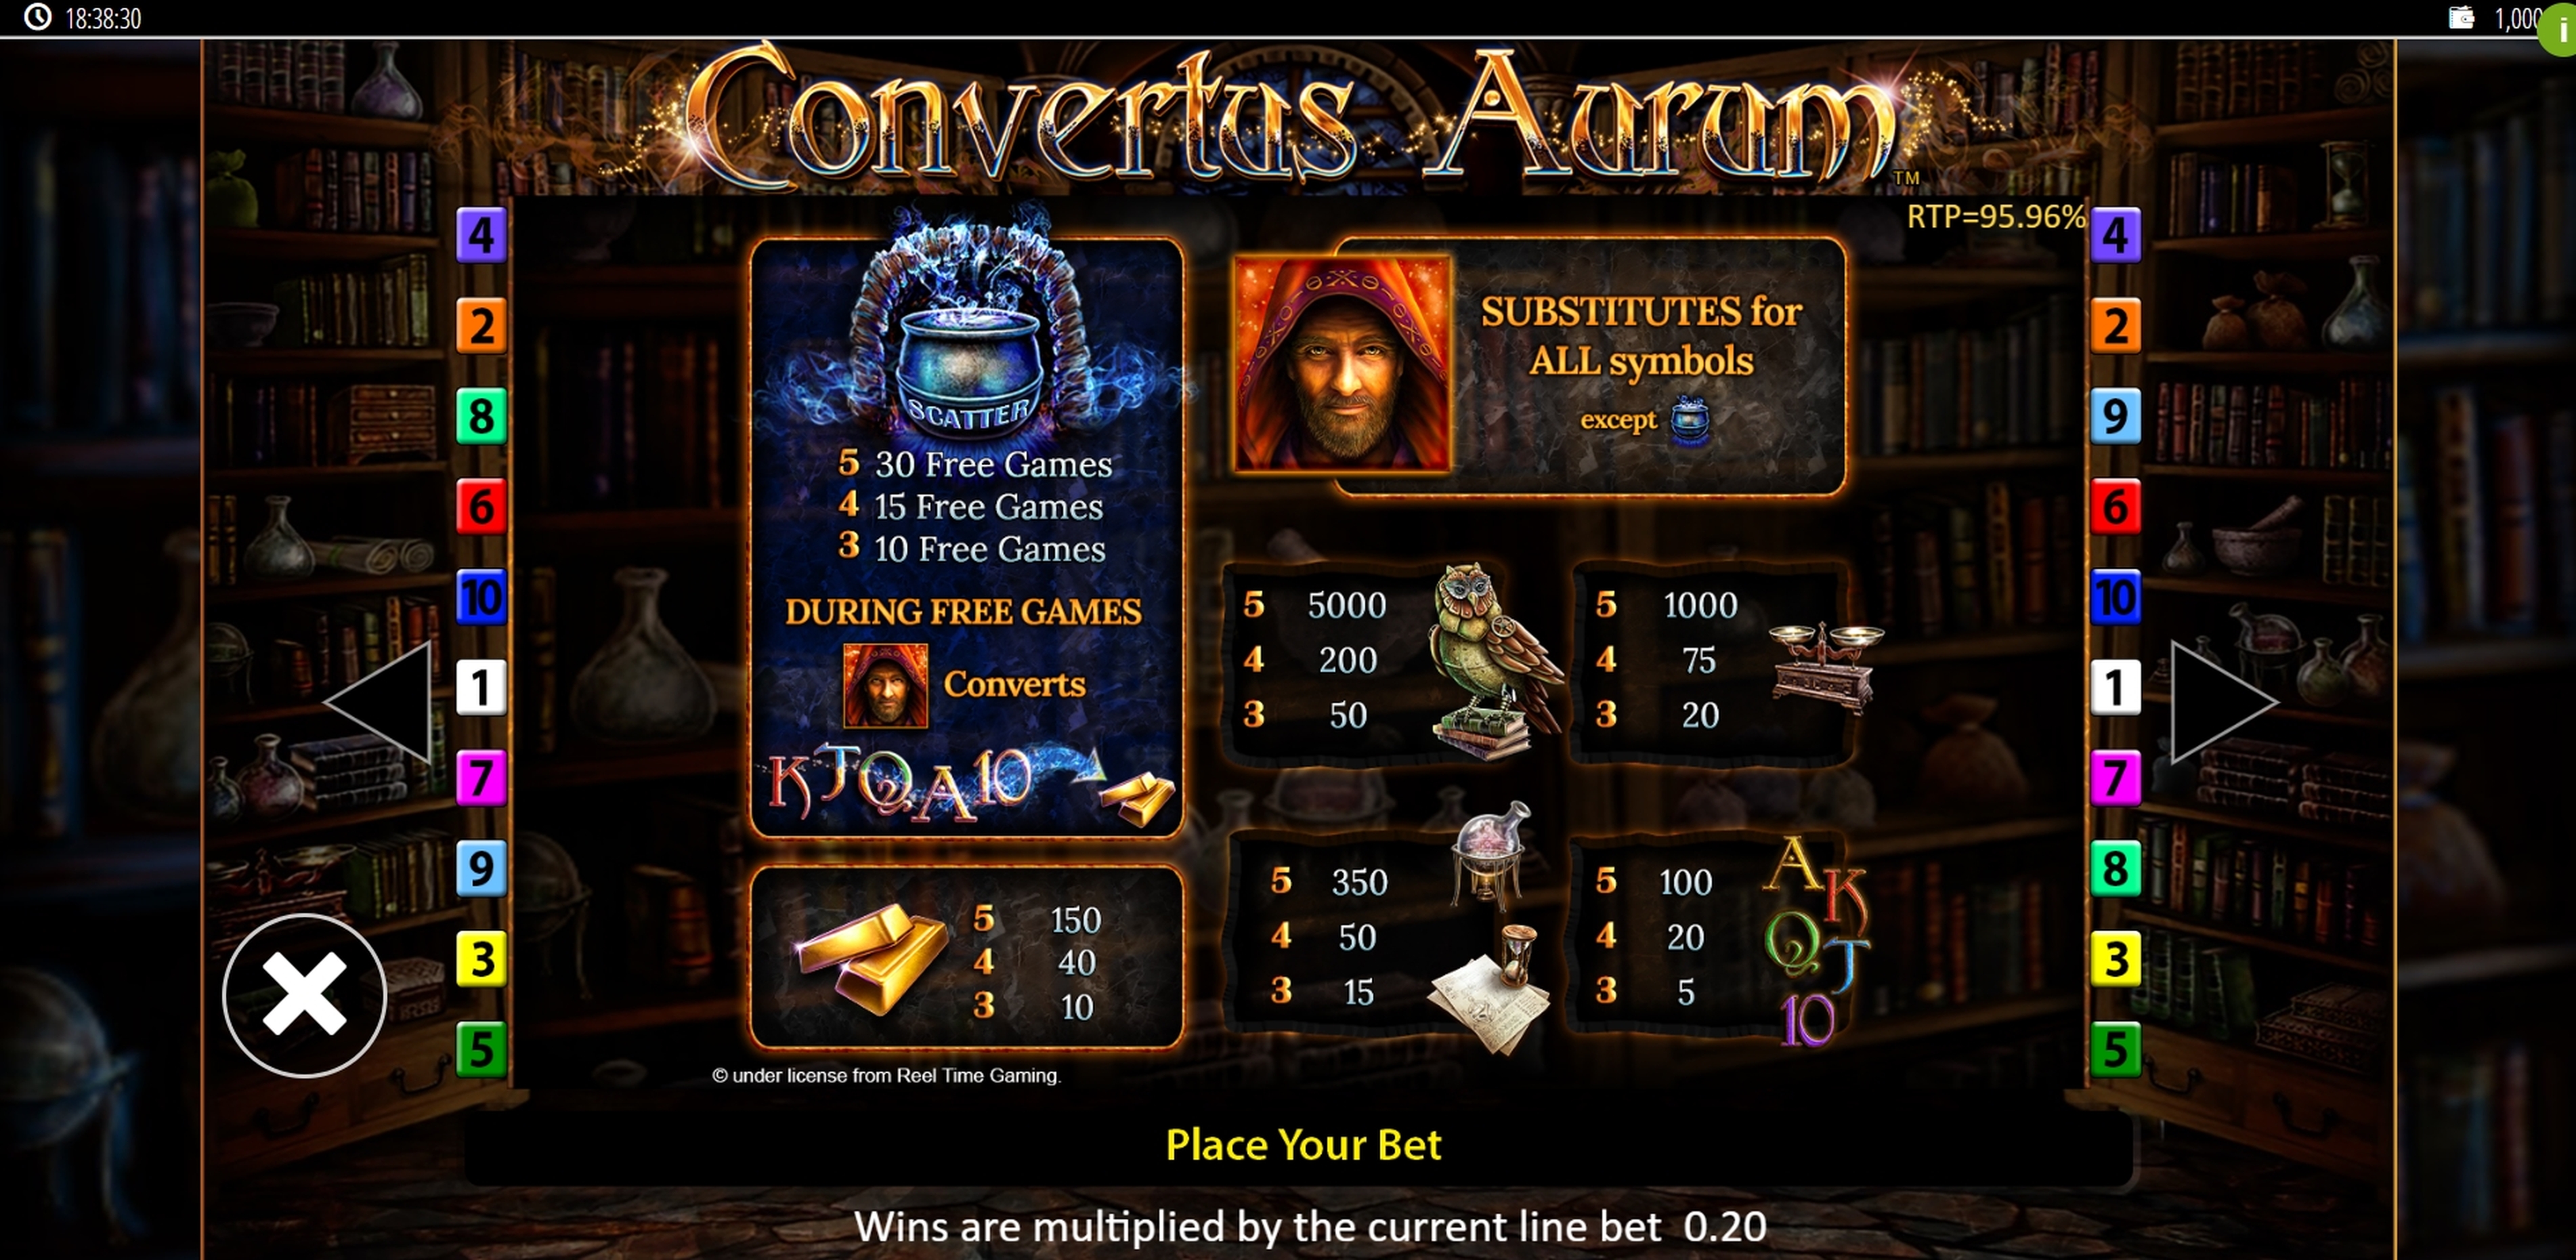 Info of Convertus Aurum Slot Game by Reel Time Gaming